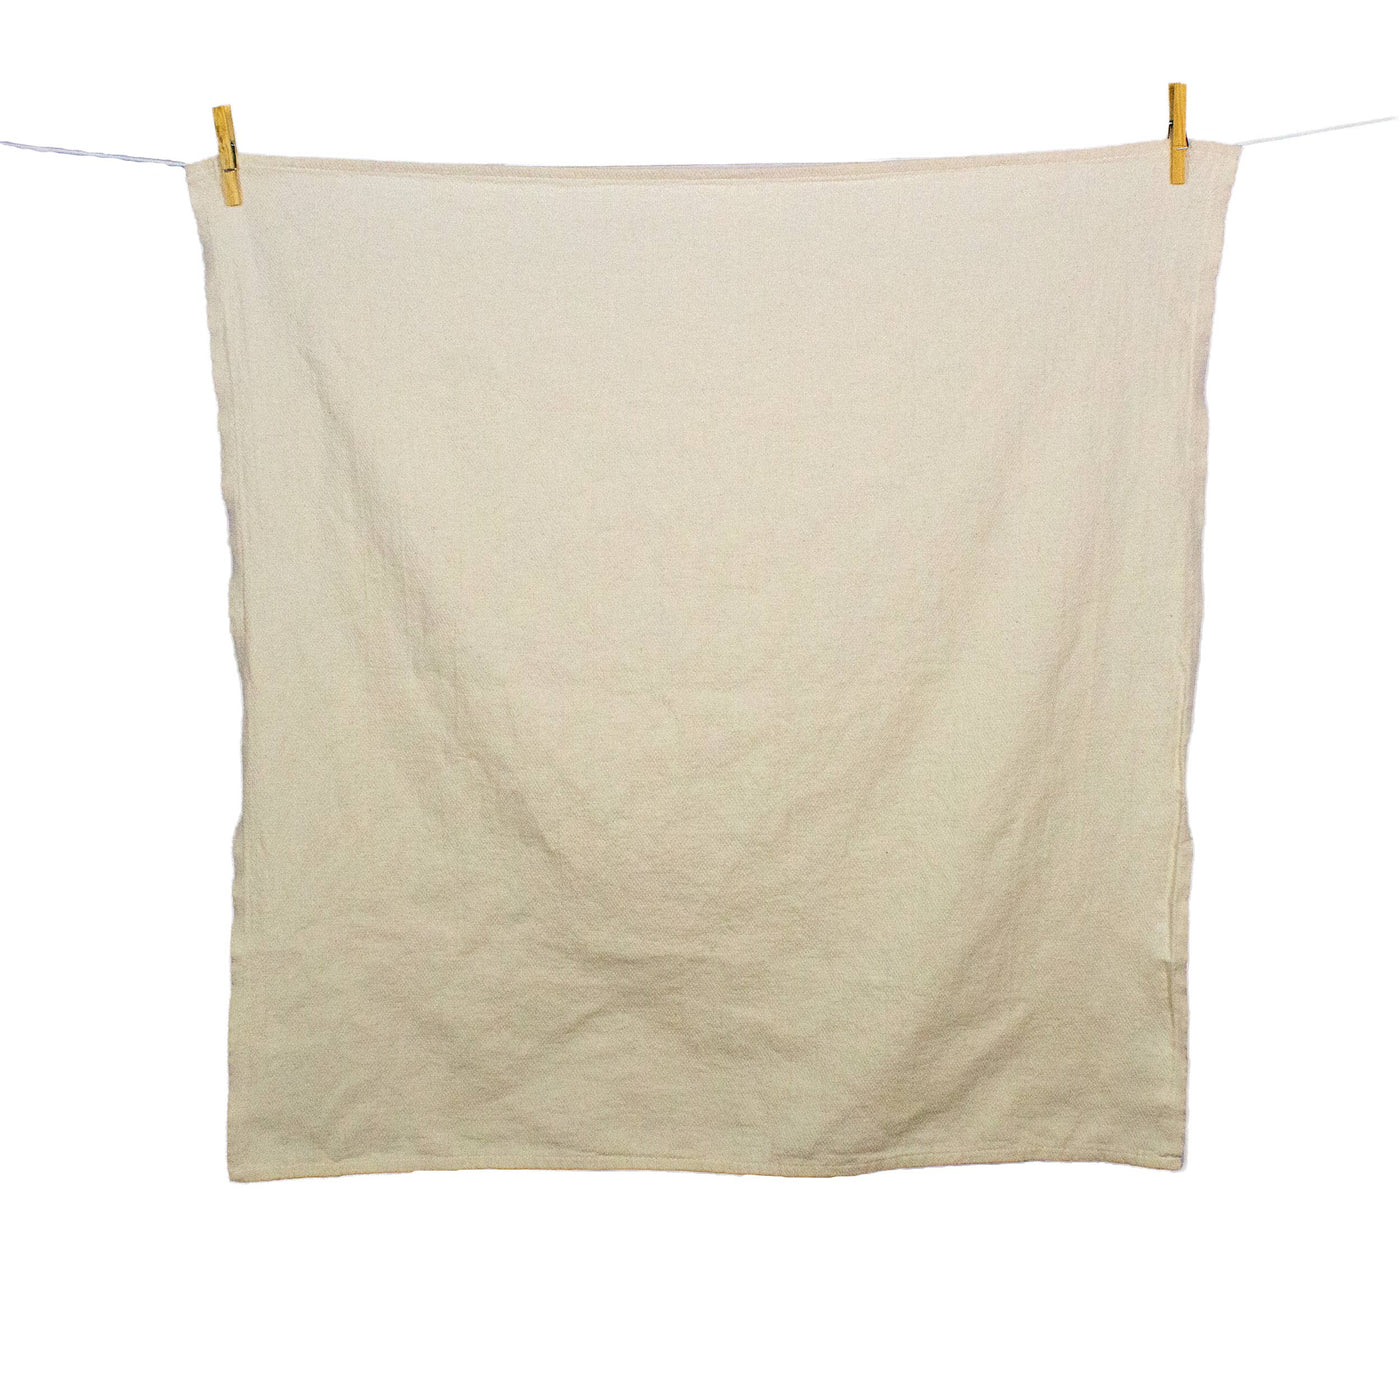 Cloth-eez size large birdseye flat cloth diaper unbleached